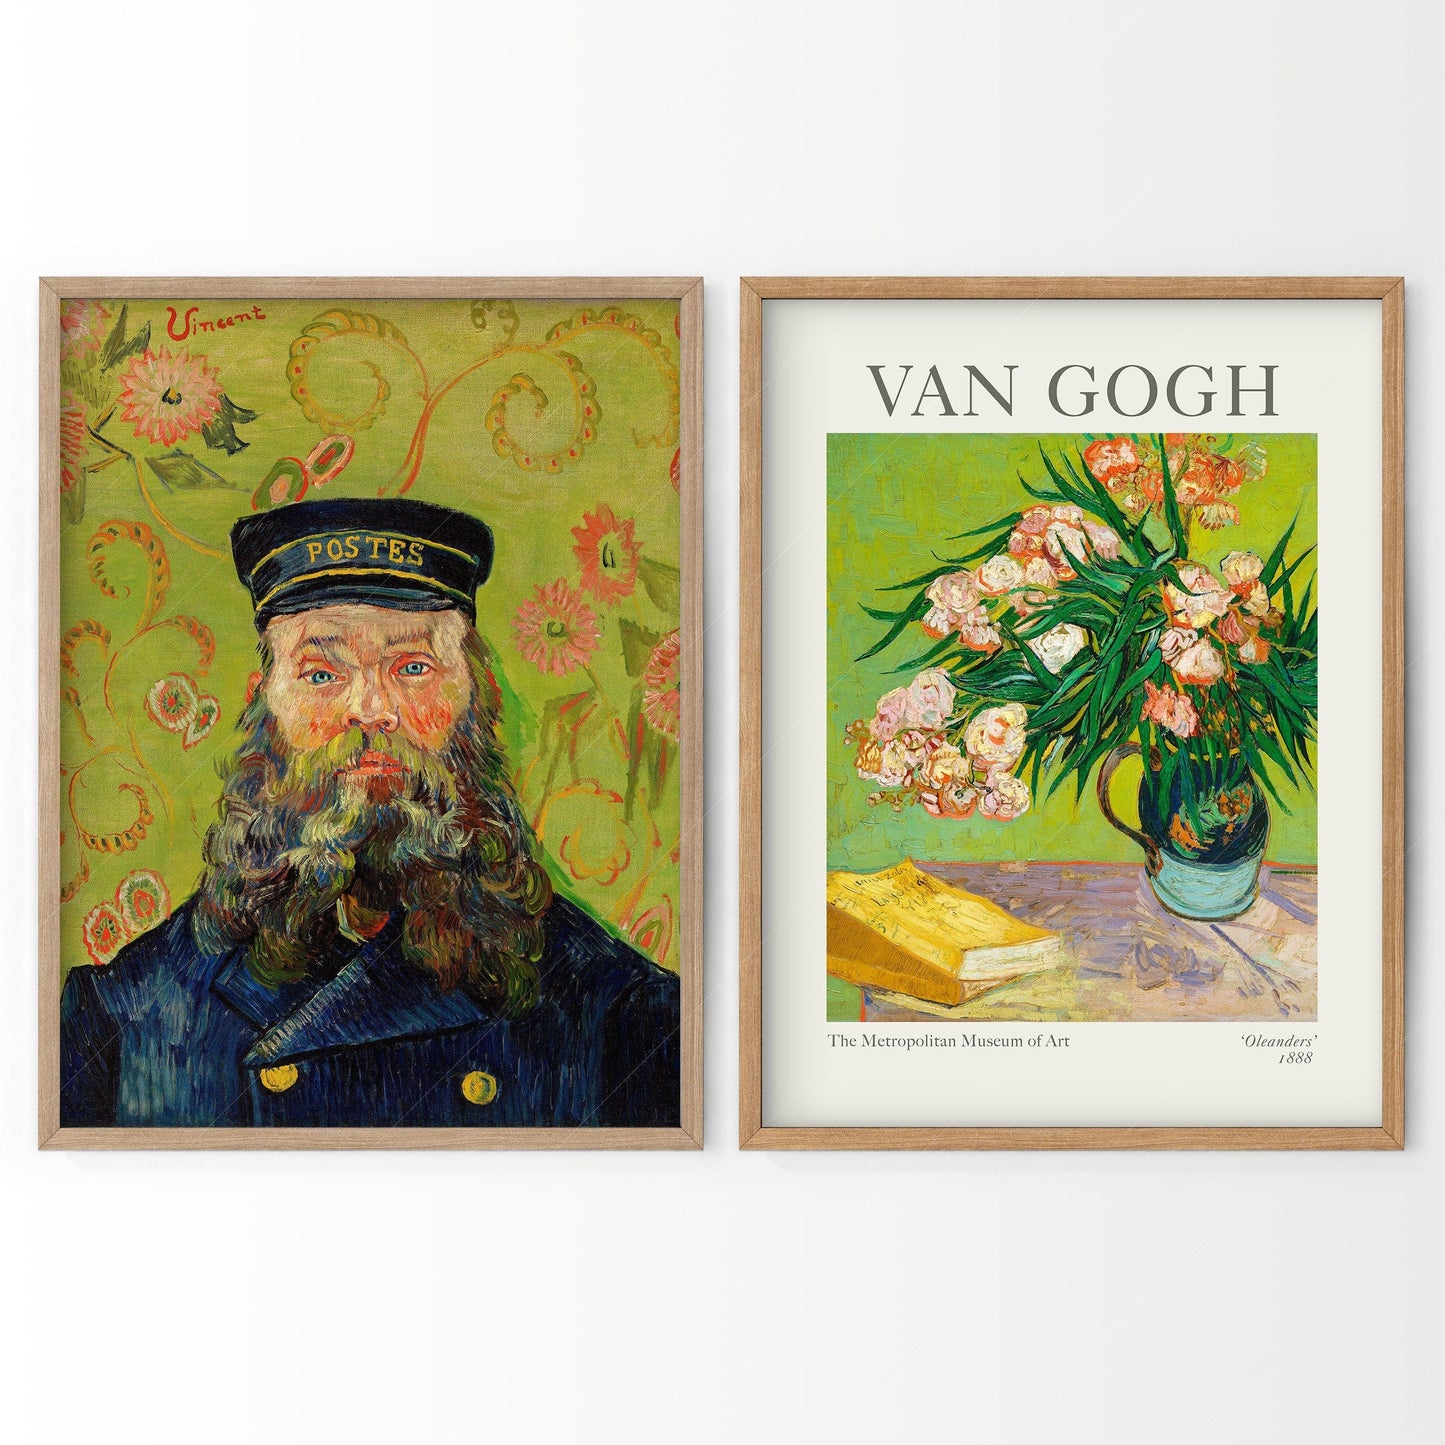 Home Poster Decor Set of 2 Van Gogh print set of 2, Van Gogh Exhibition Poster, Van Gogh Painting, Van Gogh Wall Art, Living Wall Decor, Gift Idea, Office Wall Decor